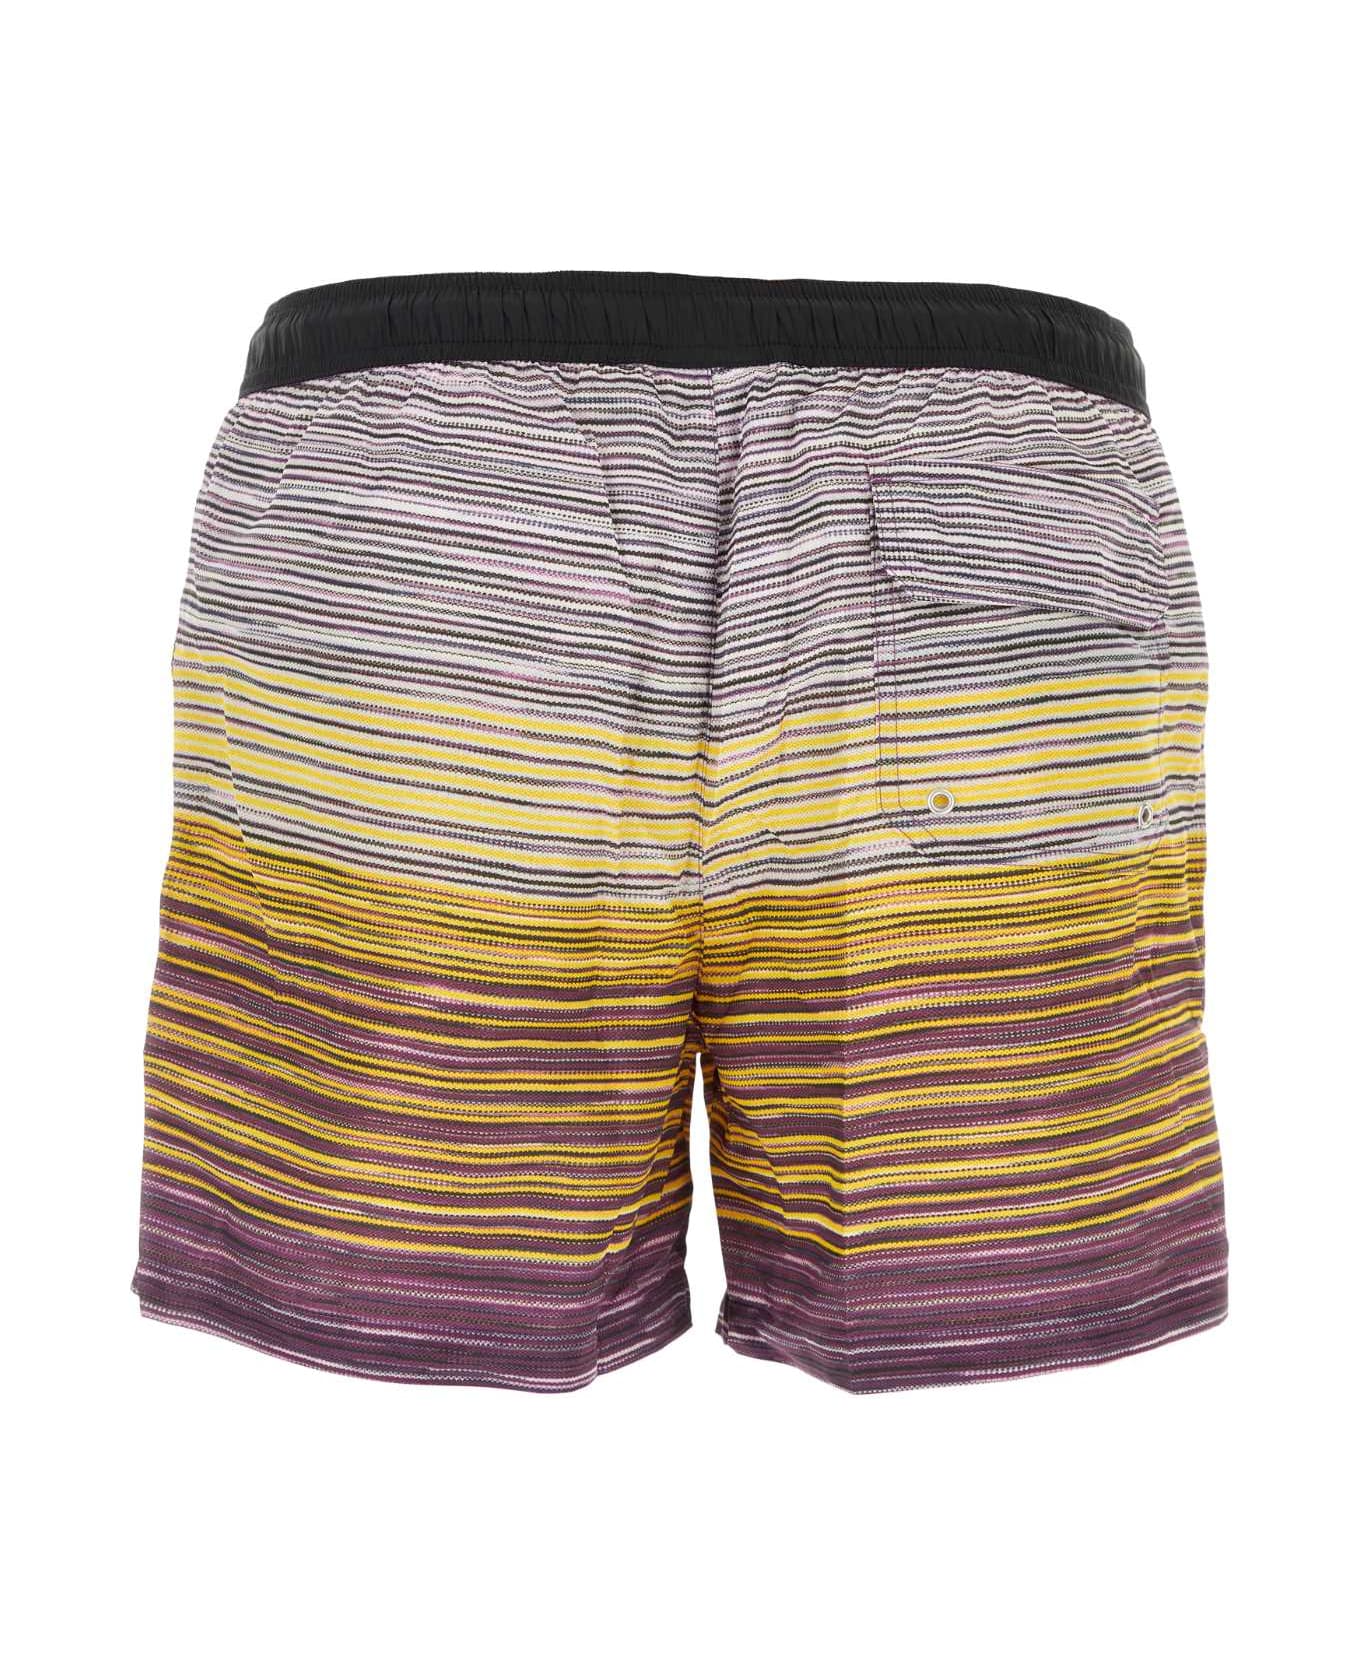 Missoni Printed Polyester Blend Swimming Shorts - YELVIOPUR 水着